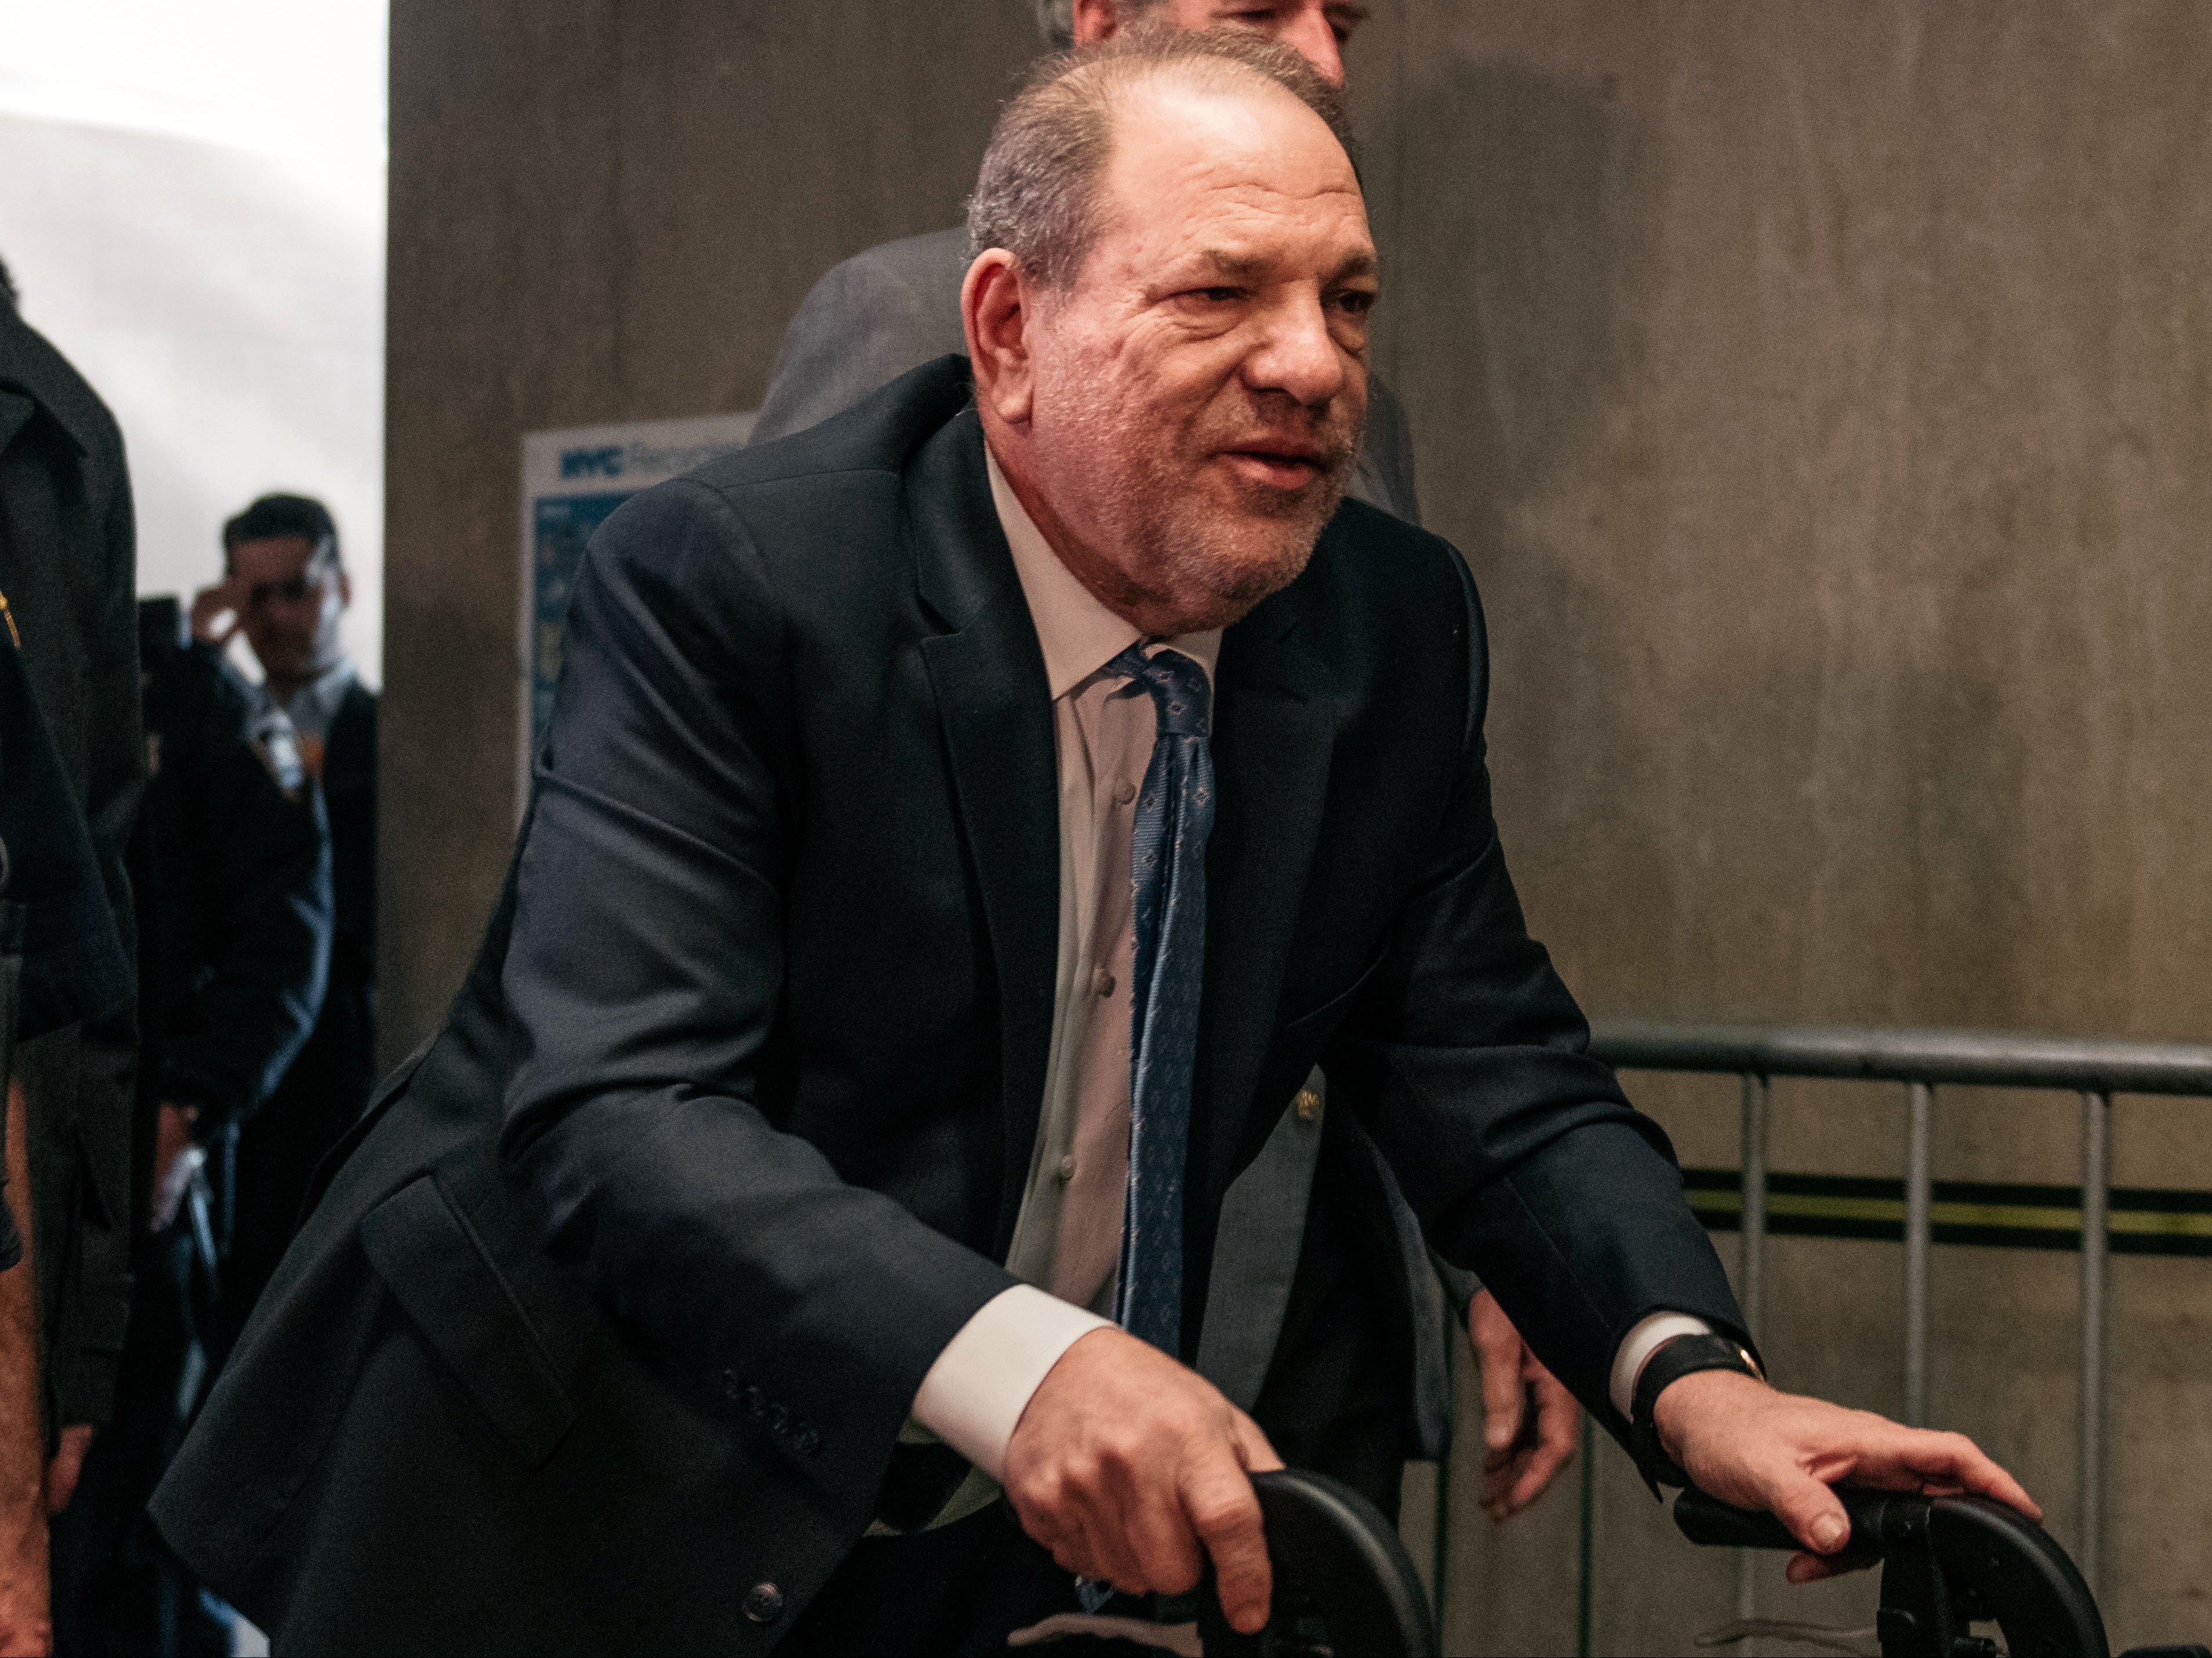 Harvey Weinstein enters New York City Criminal Court on 24 February 2020 in New York City